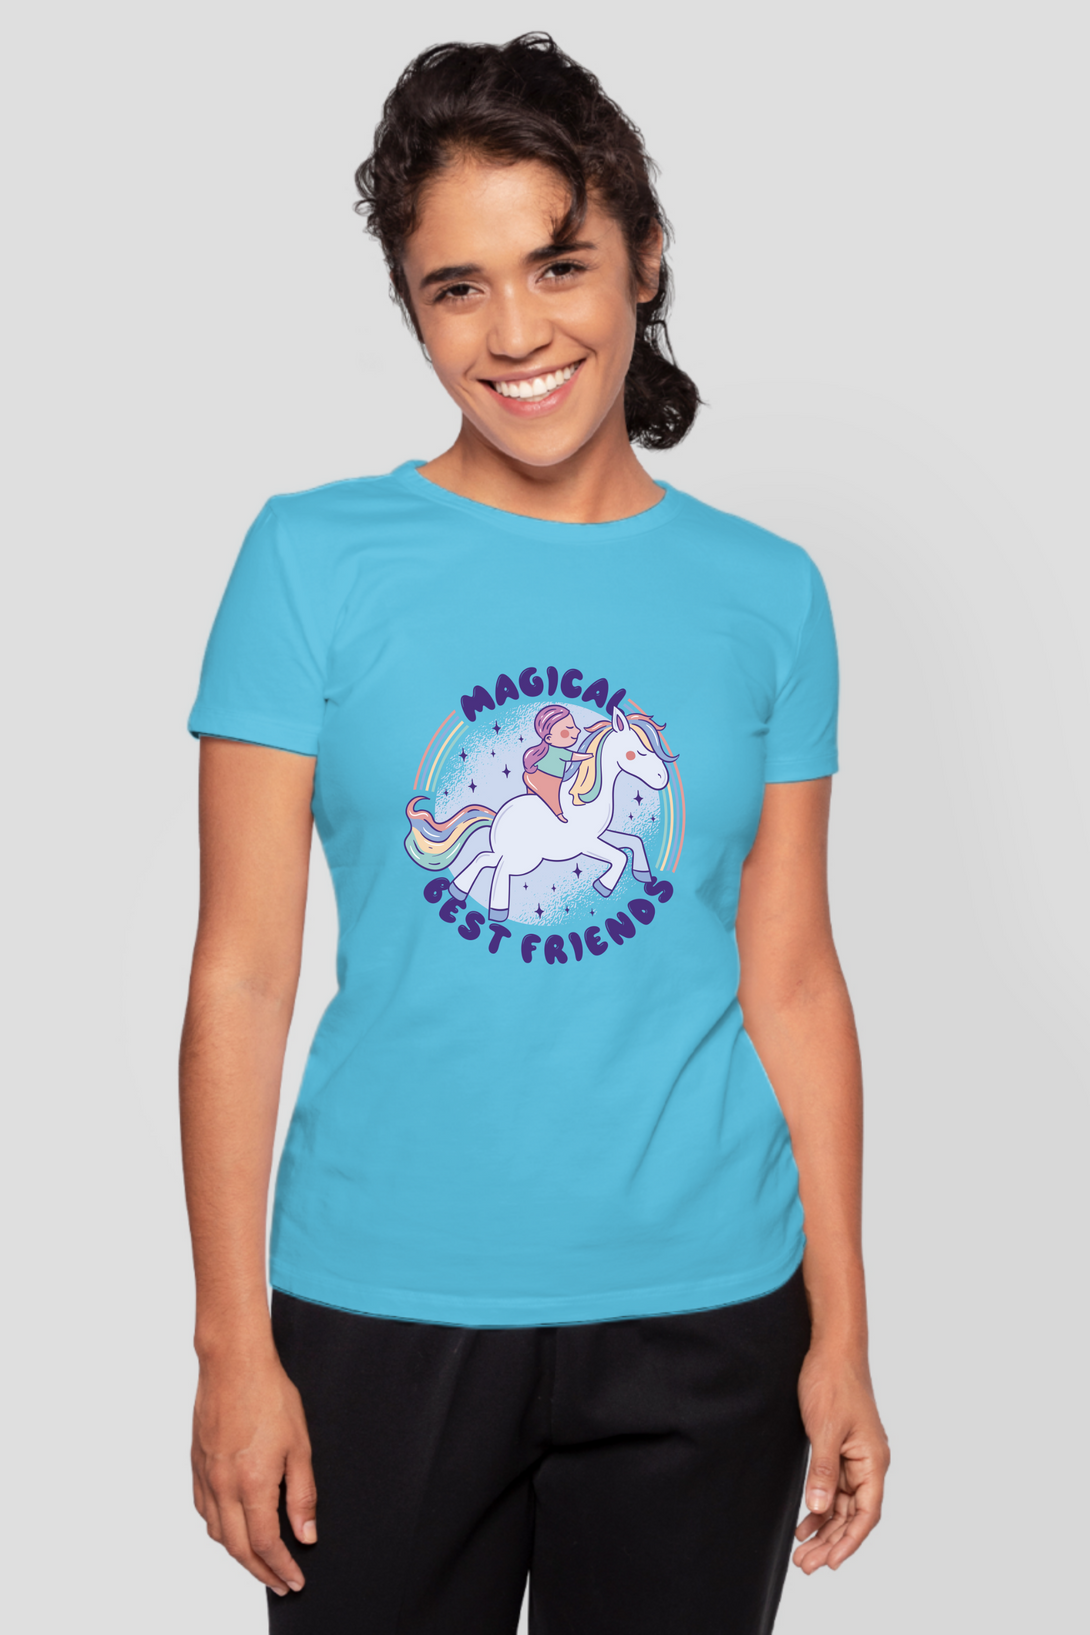 Magical Friend Printed T-Shirt For Women - WowWaves - 6